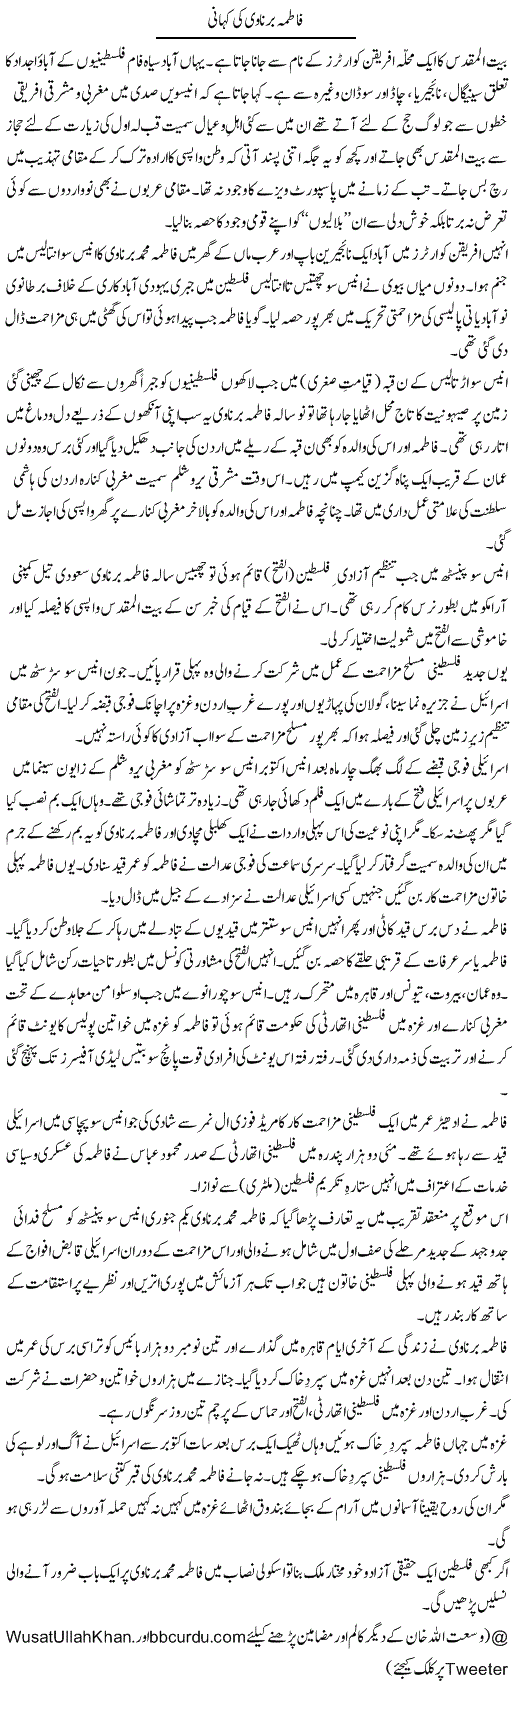 Wasatullah Khan Urdu Column About Story of Fatima Bernawi